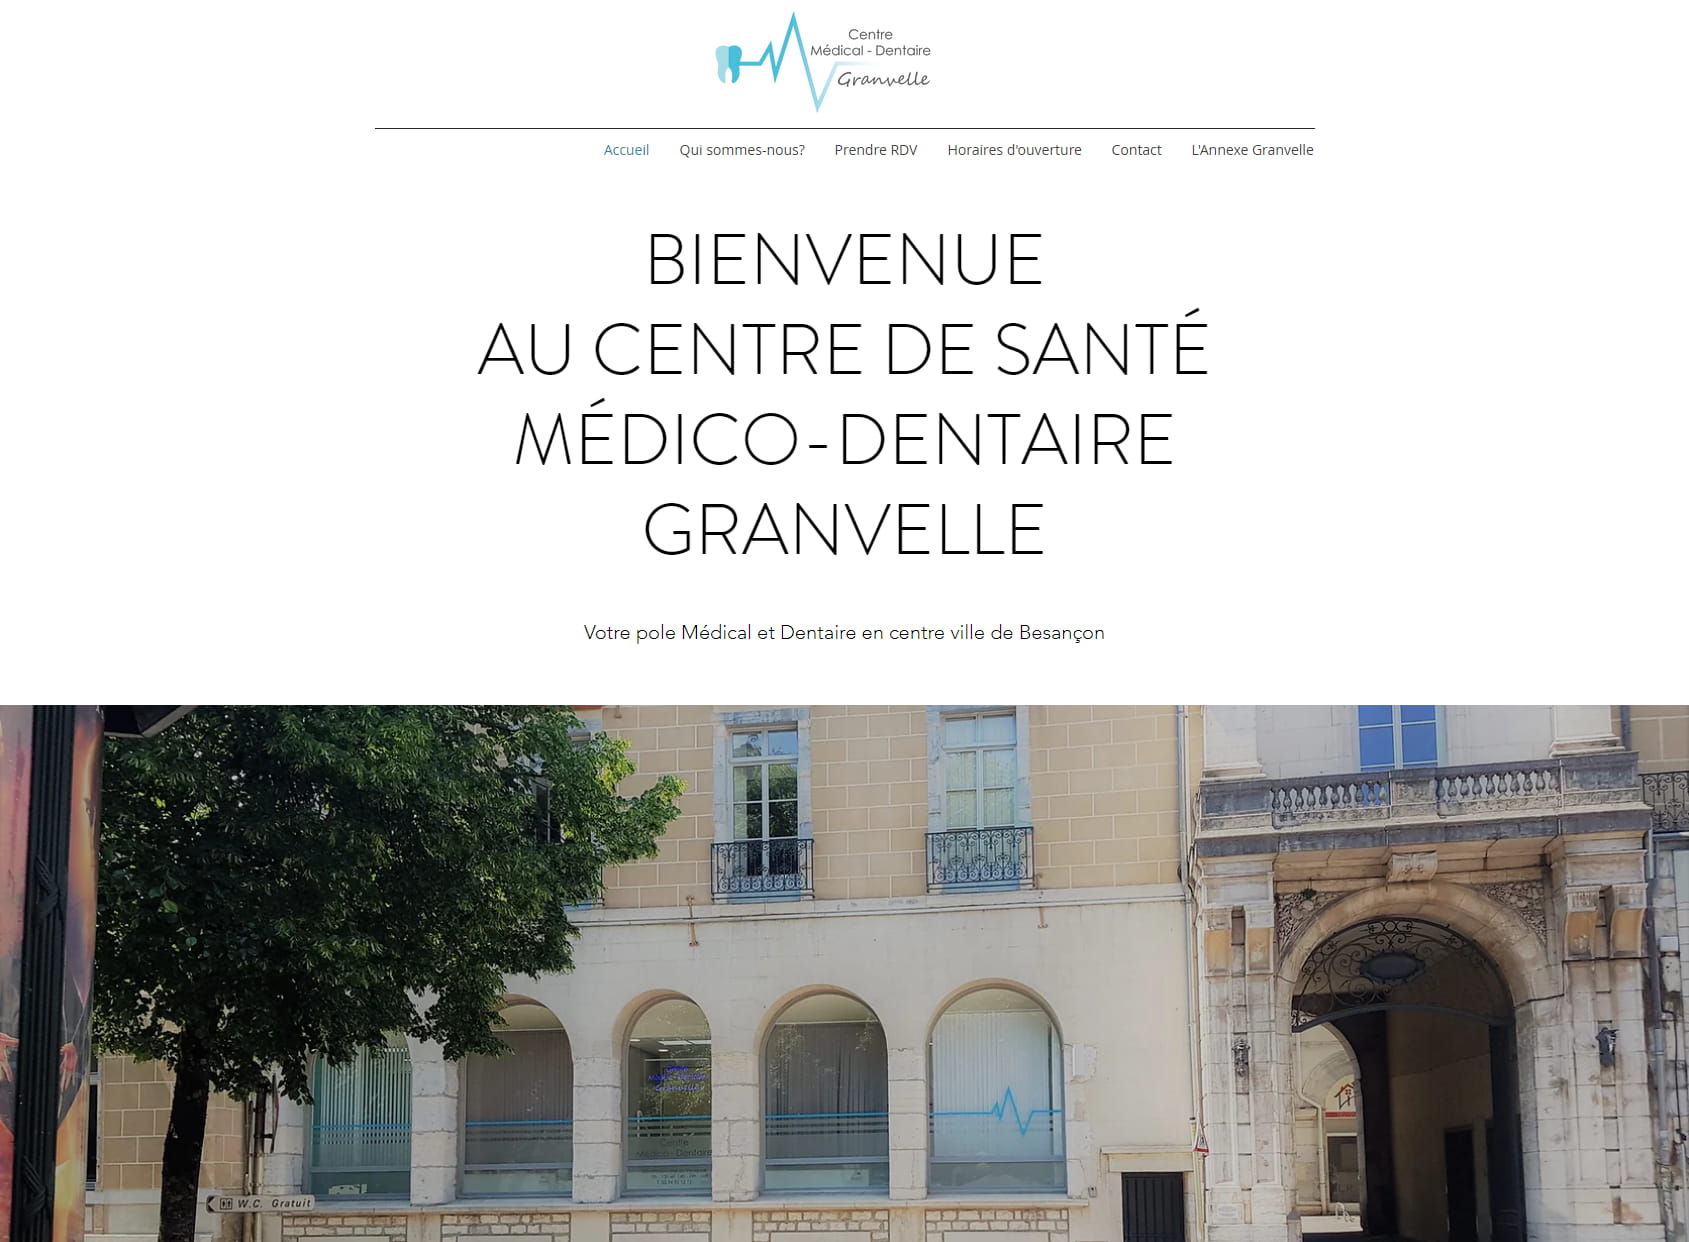 Health Center Medico Dentaire Granvelle